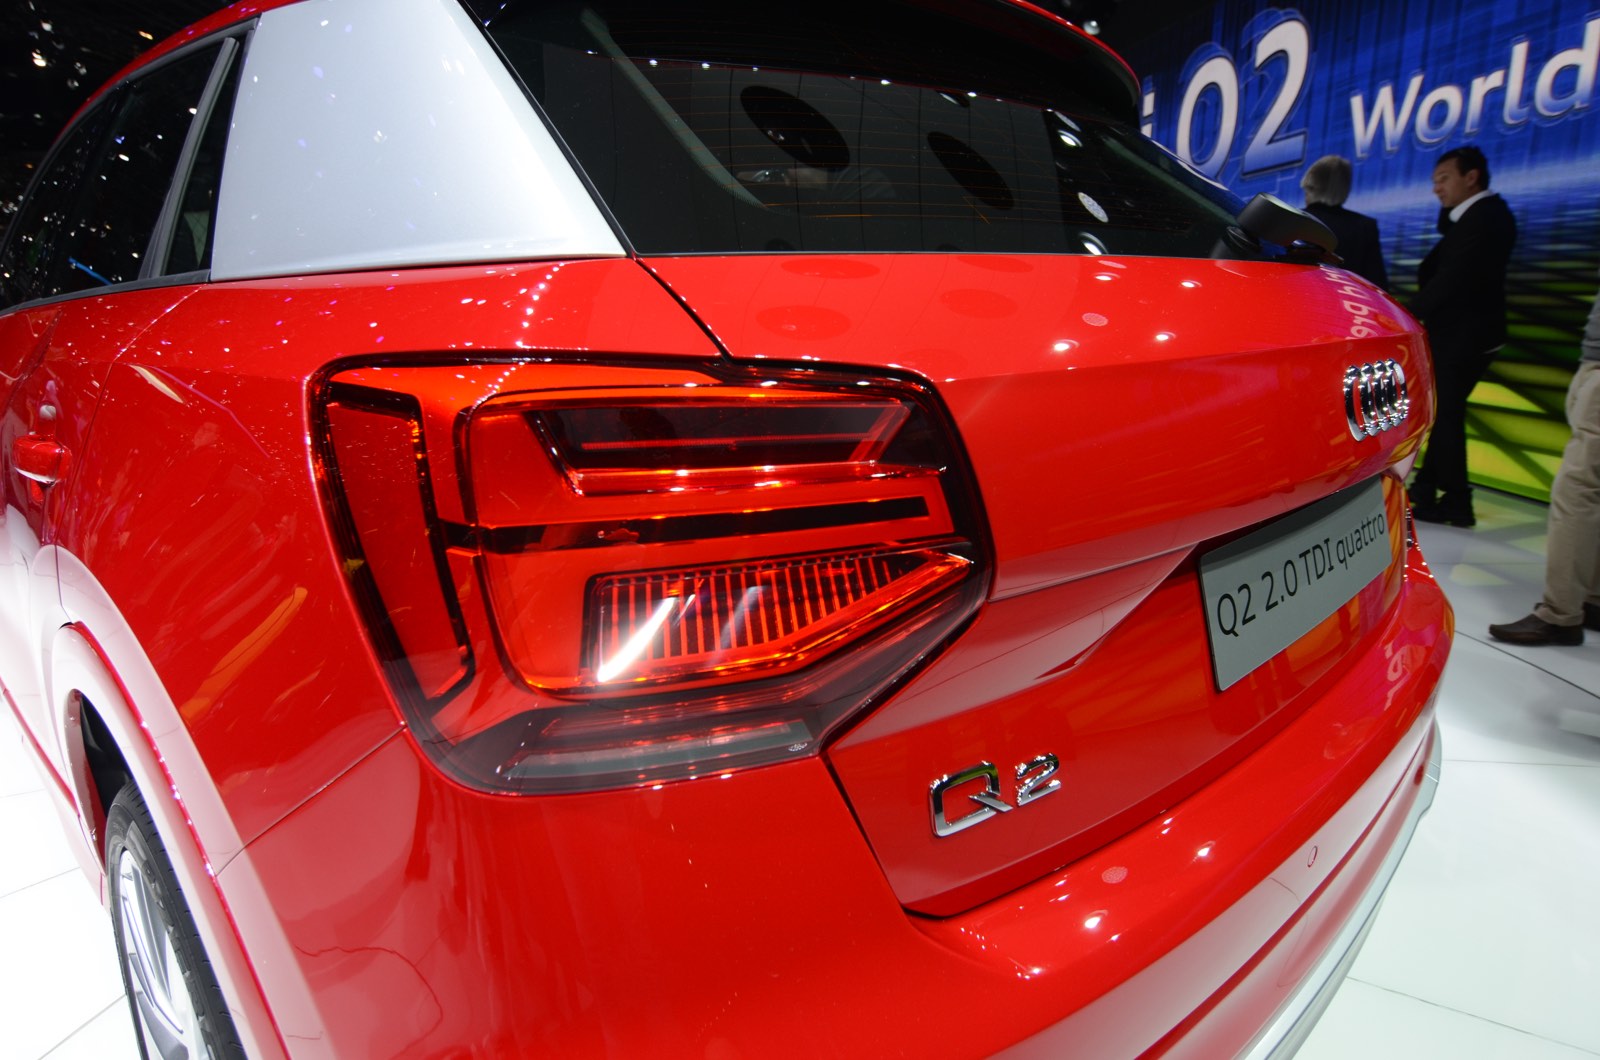 Audi Q2 at the Geneva Motor Show 2016